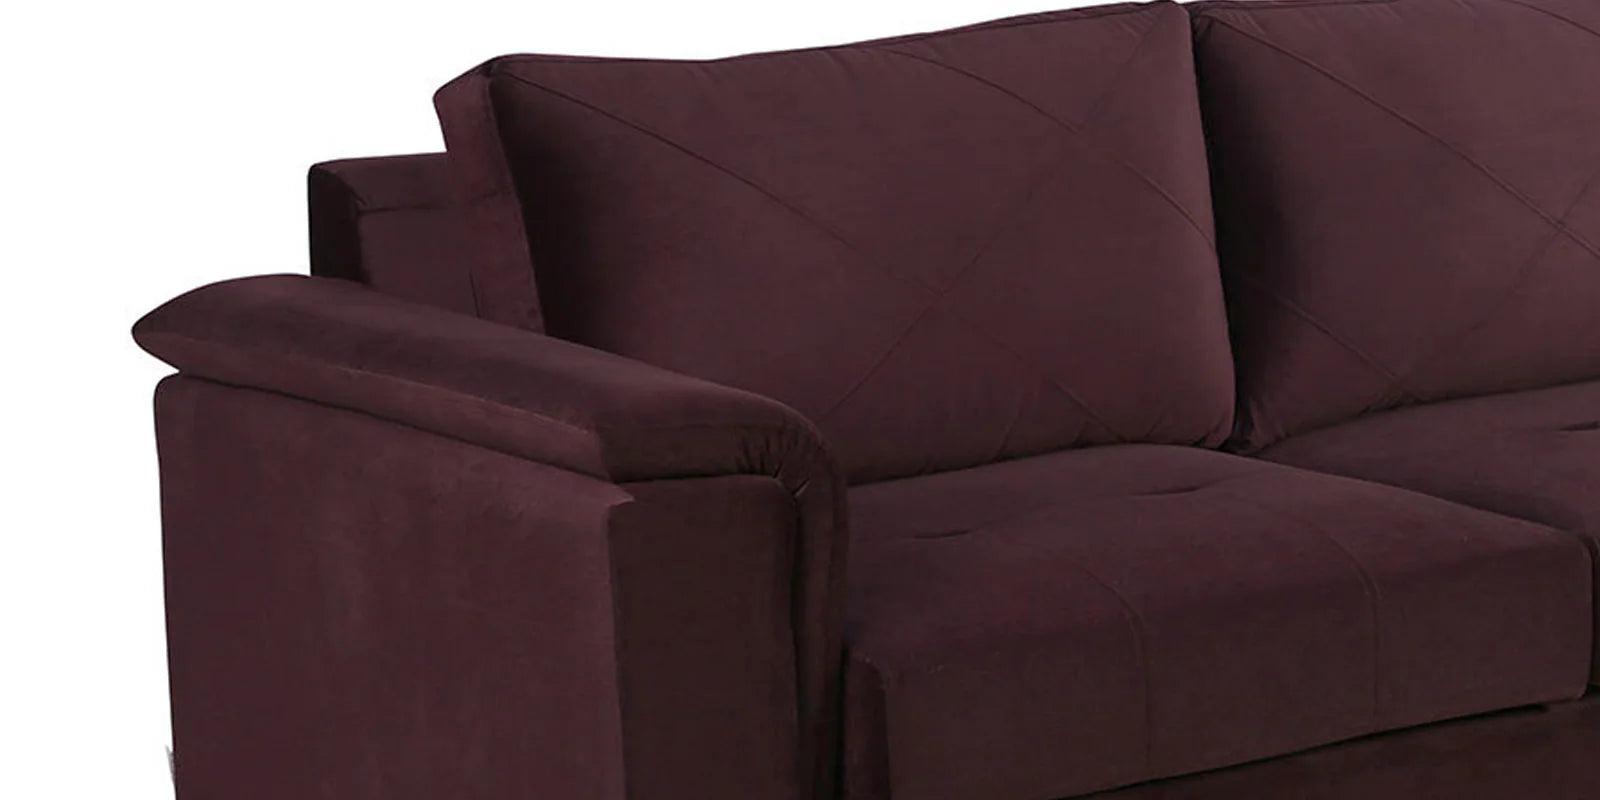 Velvet 3 Seater Sofa In Wine Colour - Ouch Cart 